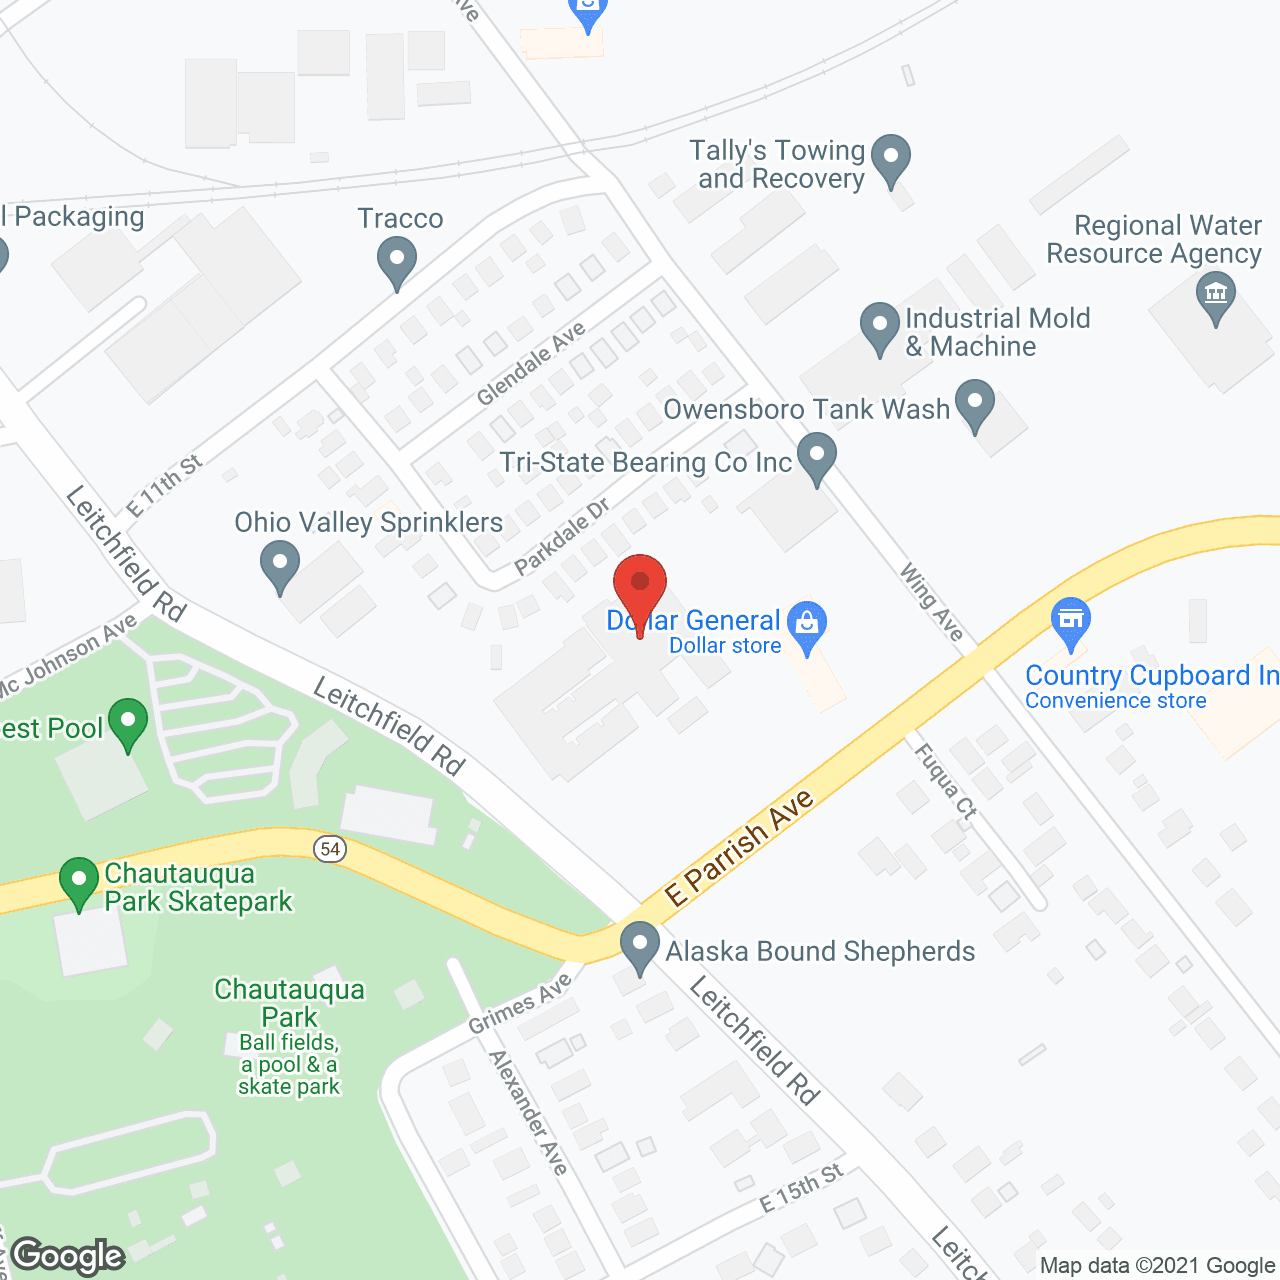 Owensboro Center in google map